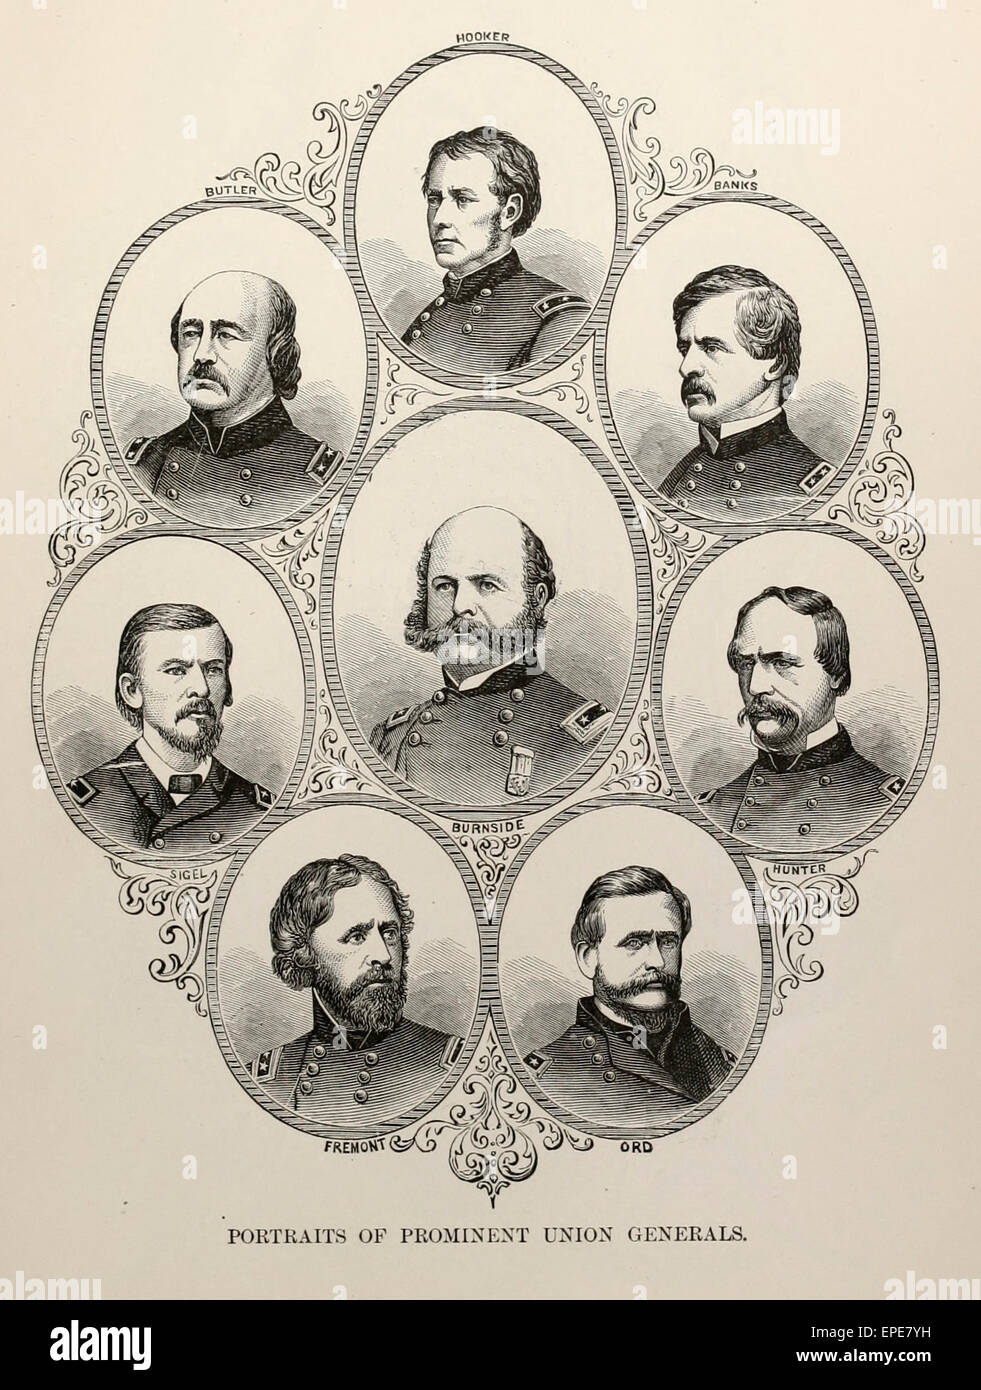 Porträts von prominenten Union Generäle während des Bürgerkrieges USA - Fremont, Ord, Burnside, Hunter, Sigel, Butler, Hooker, Banken Stockfoto